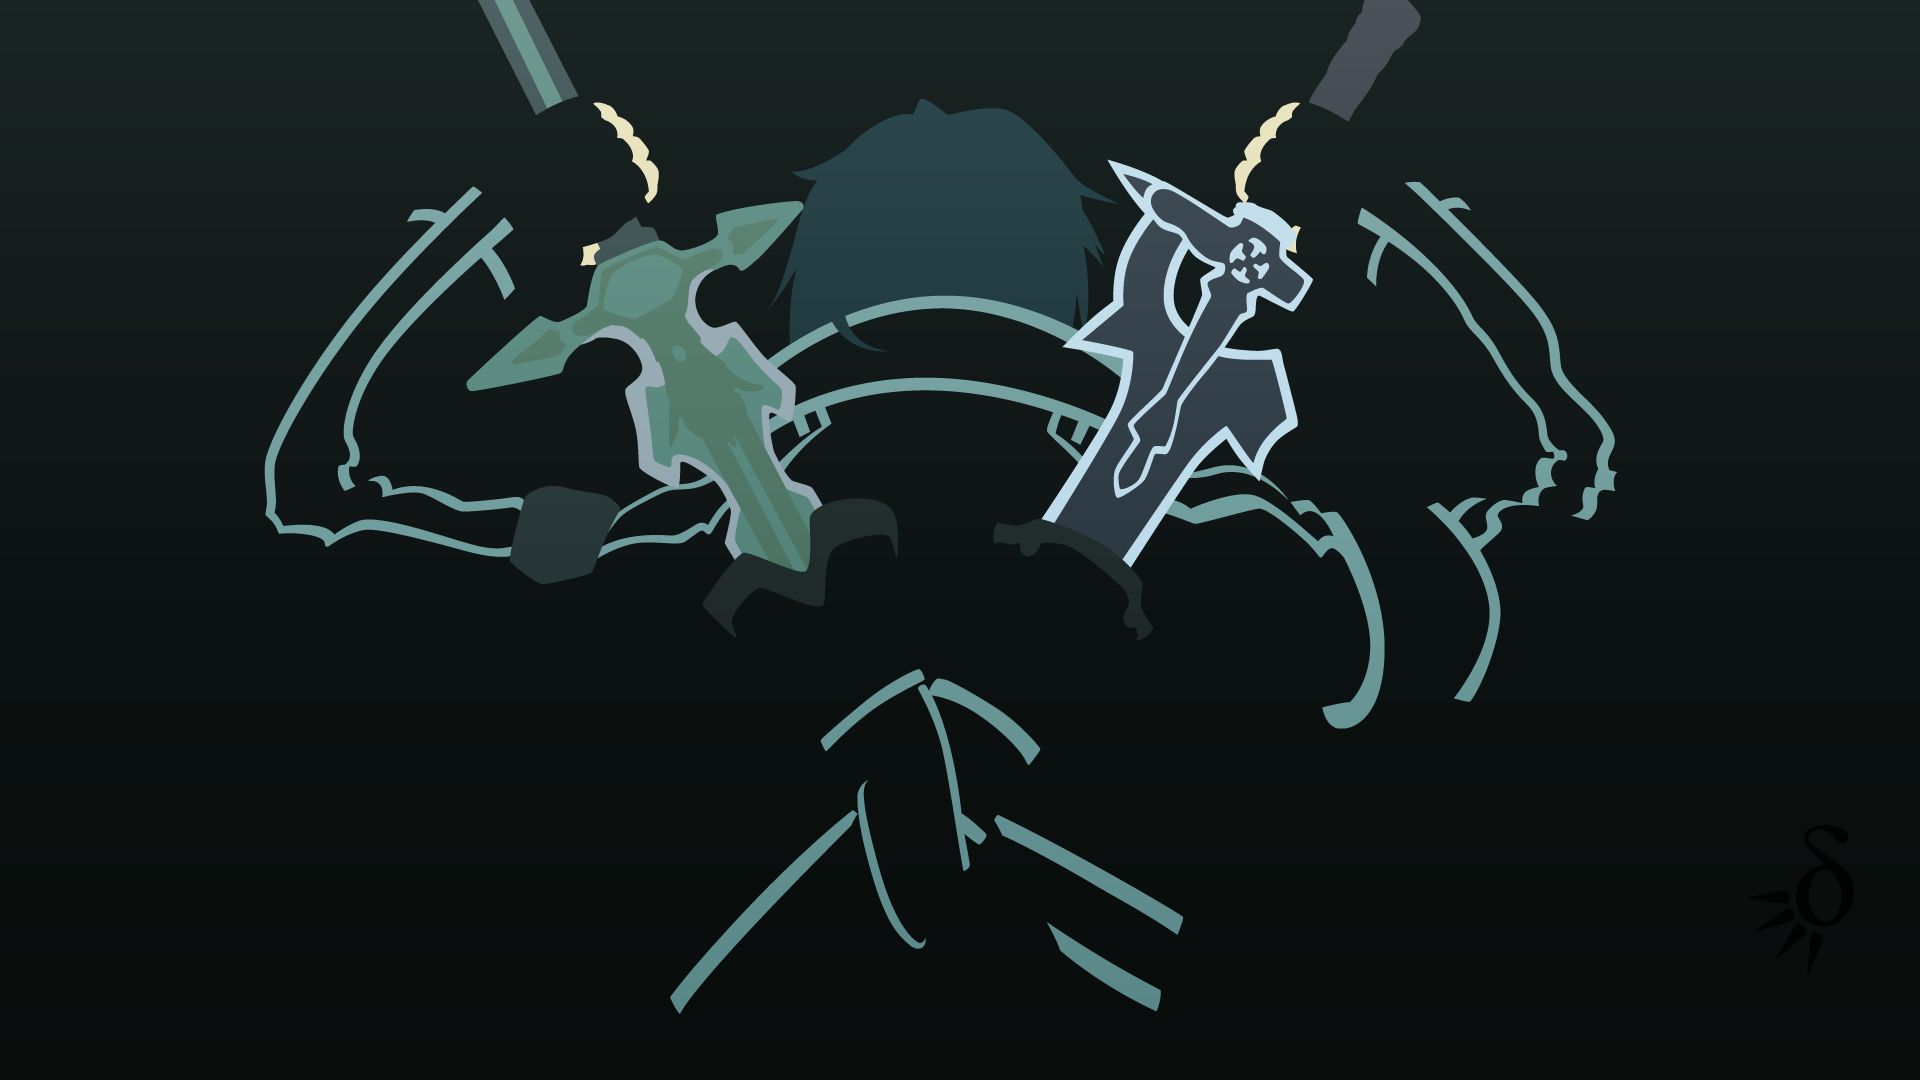 Descarga gratuita de fondo de pantalla para móvil de Sword Art Online, Kirito (Arte De Espada En Línea), Animado.